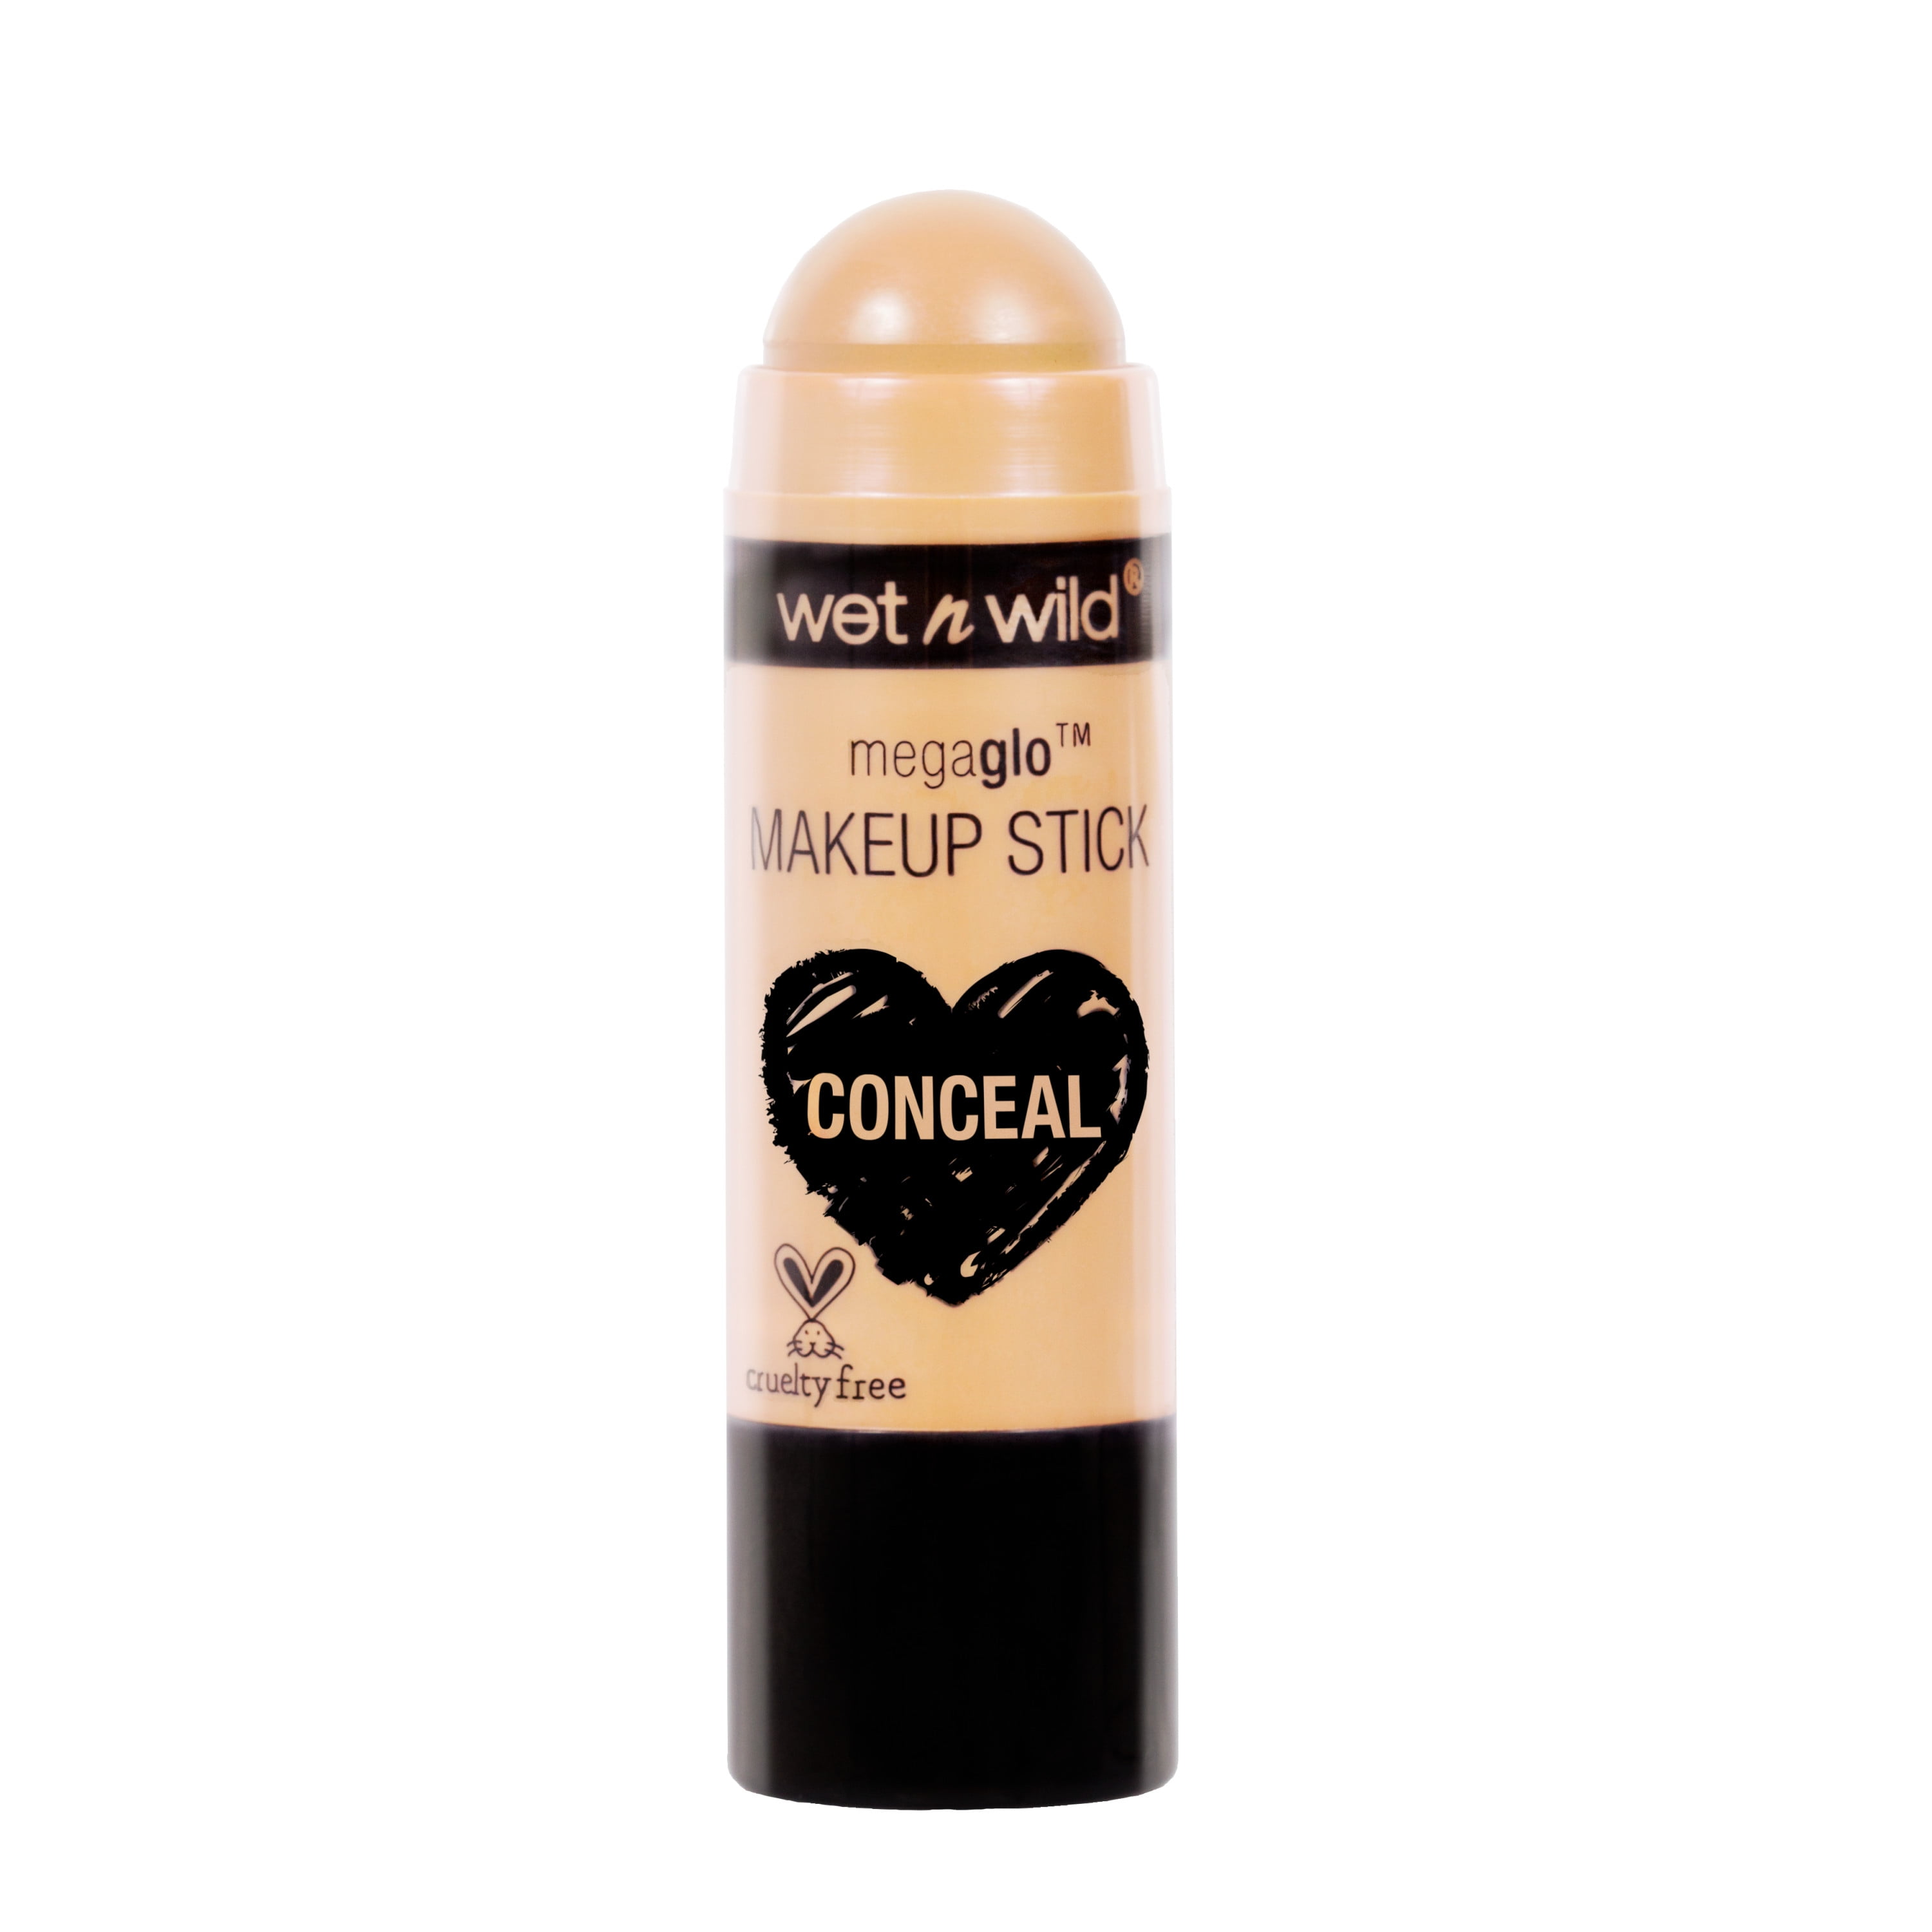 n wild MegaGlo Concealer Makeup Stick, Conceal, You're A Natural, 0.21 oz - Walmart.com